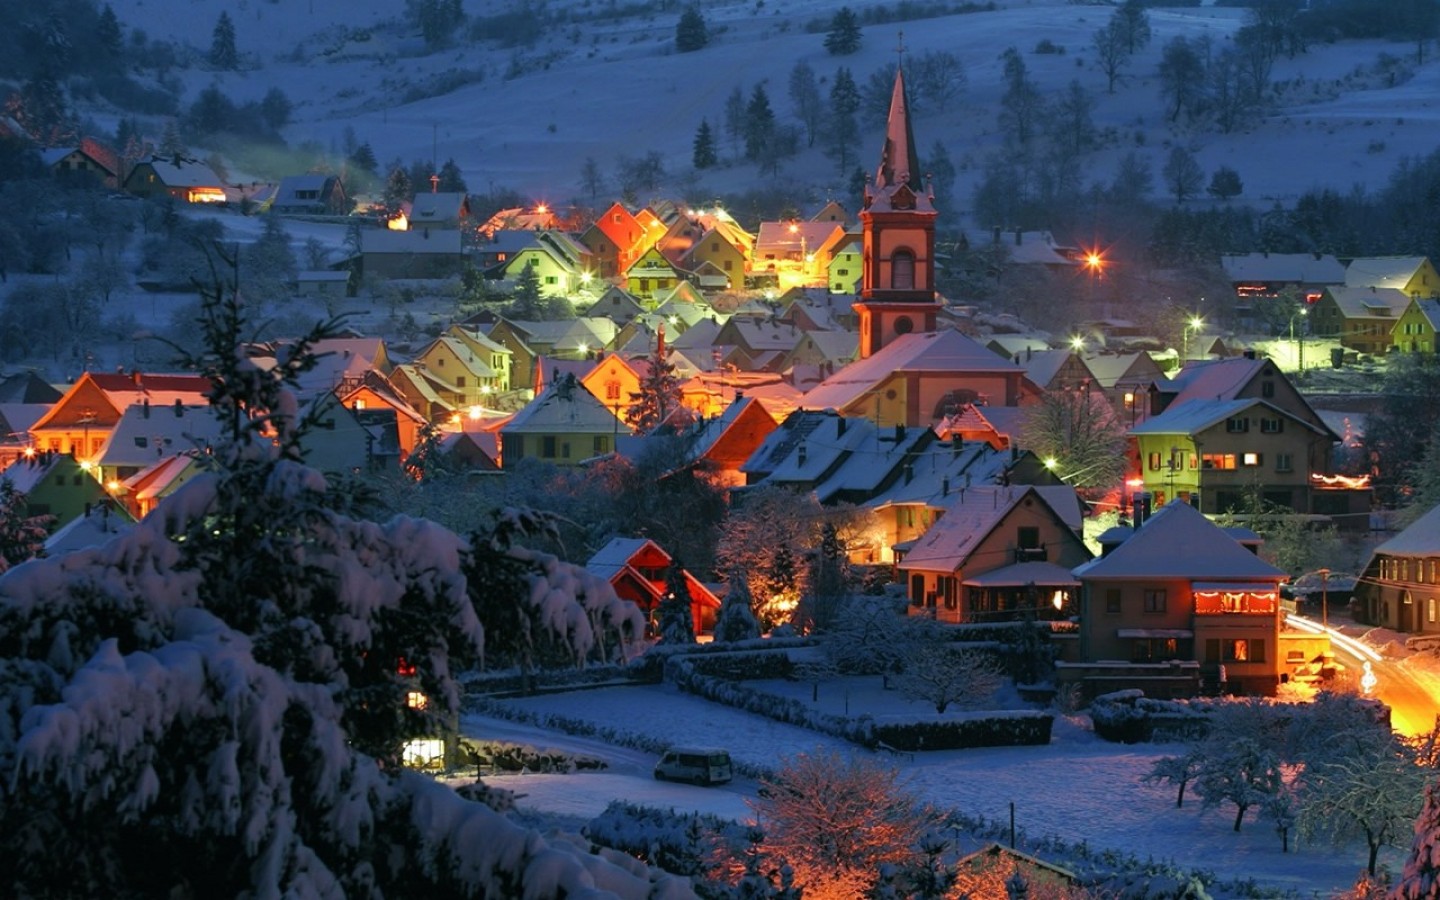 Lighted Village on a Winter Evening